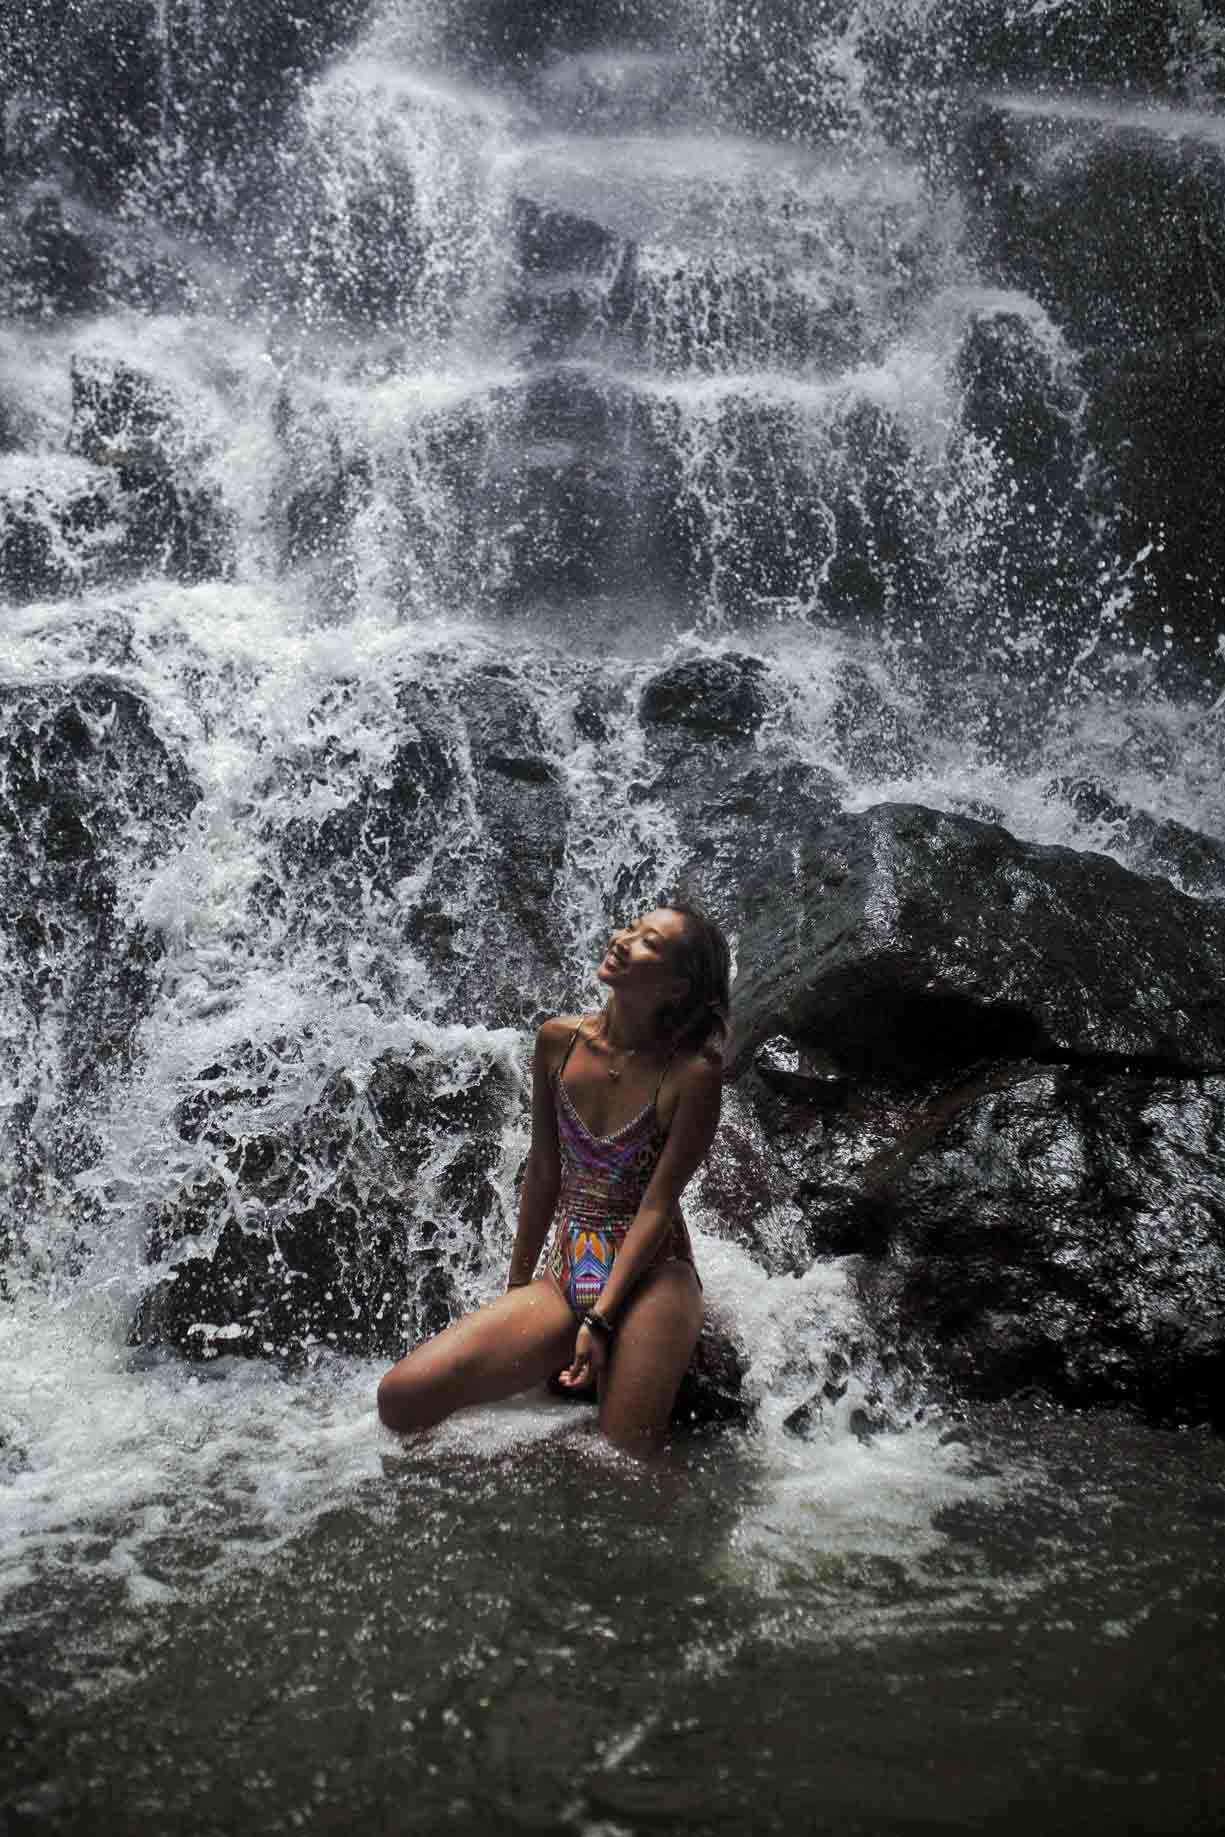 Kanto Lampo Waterfall Bali